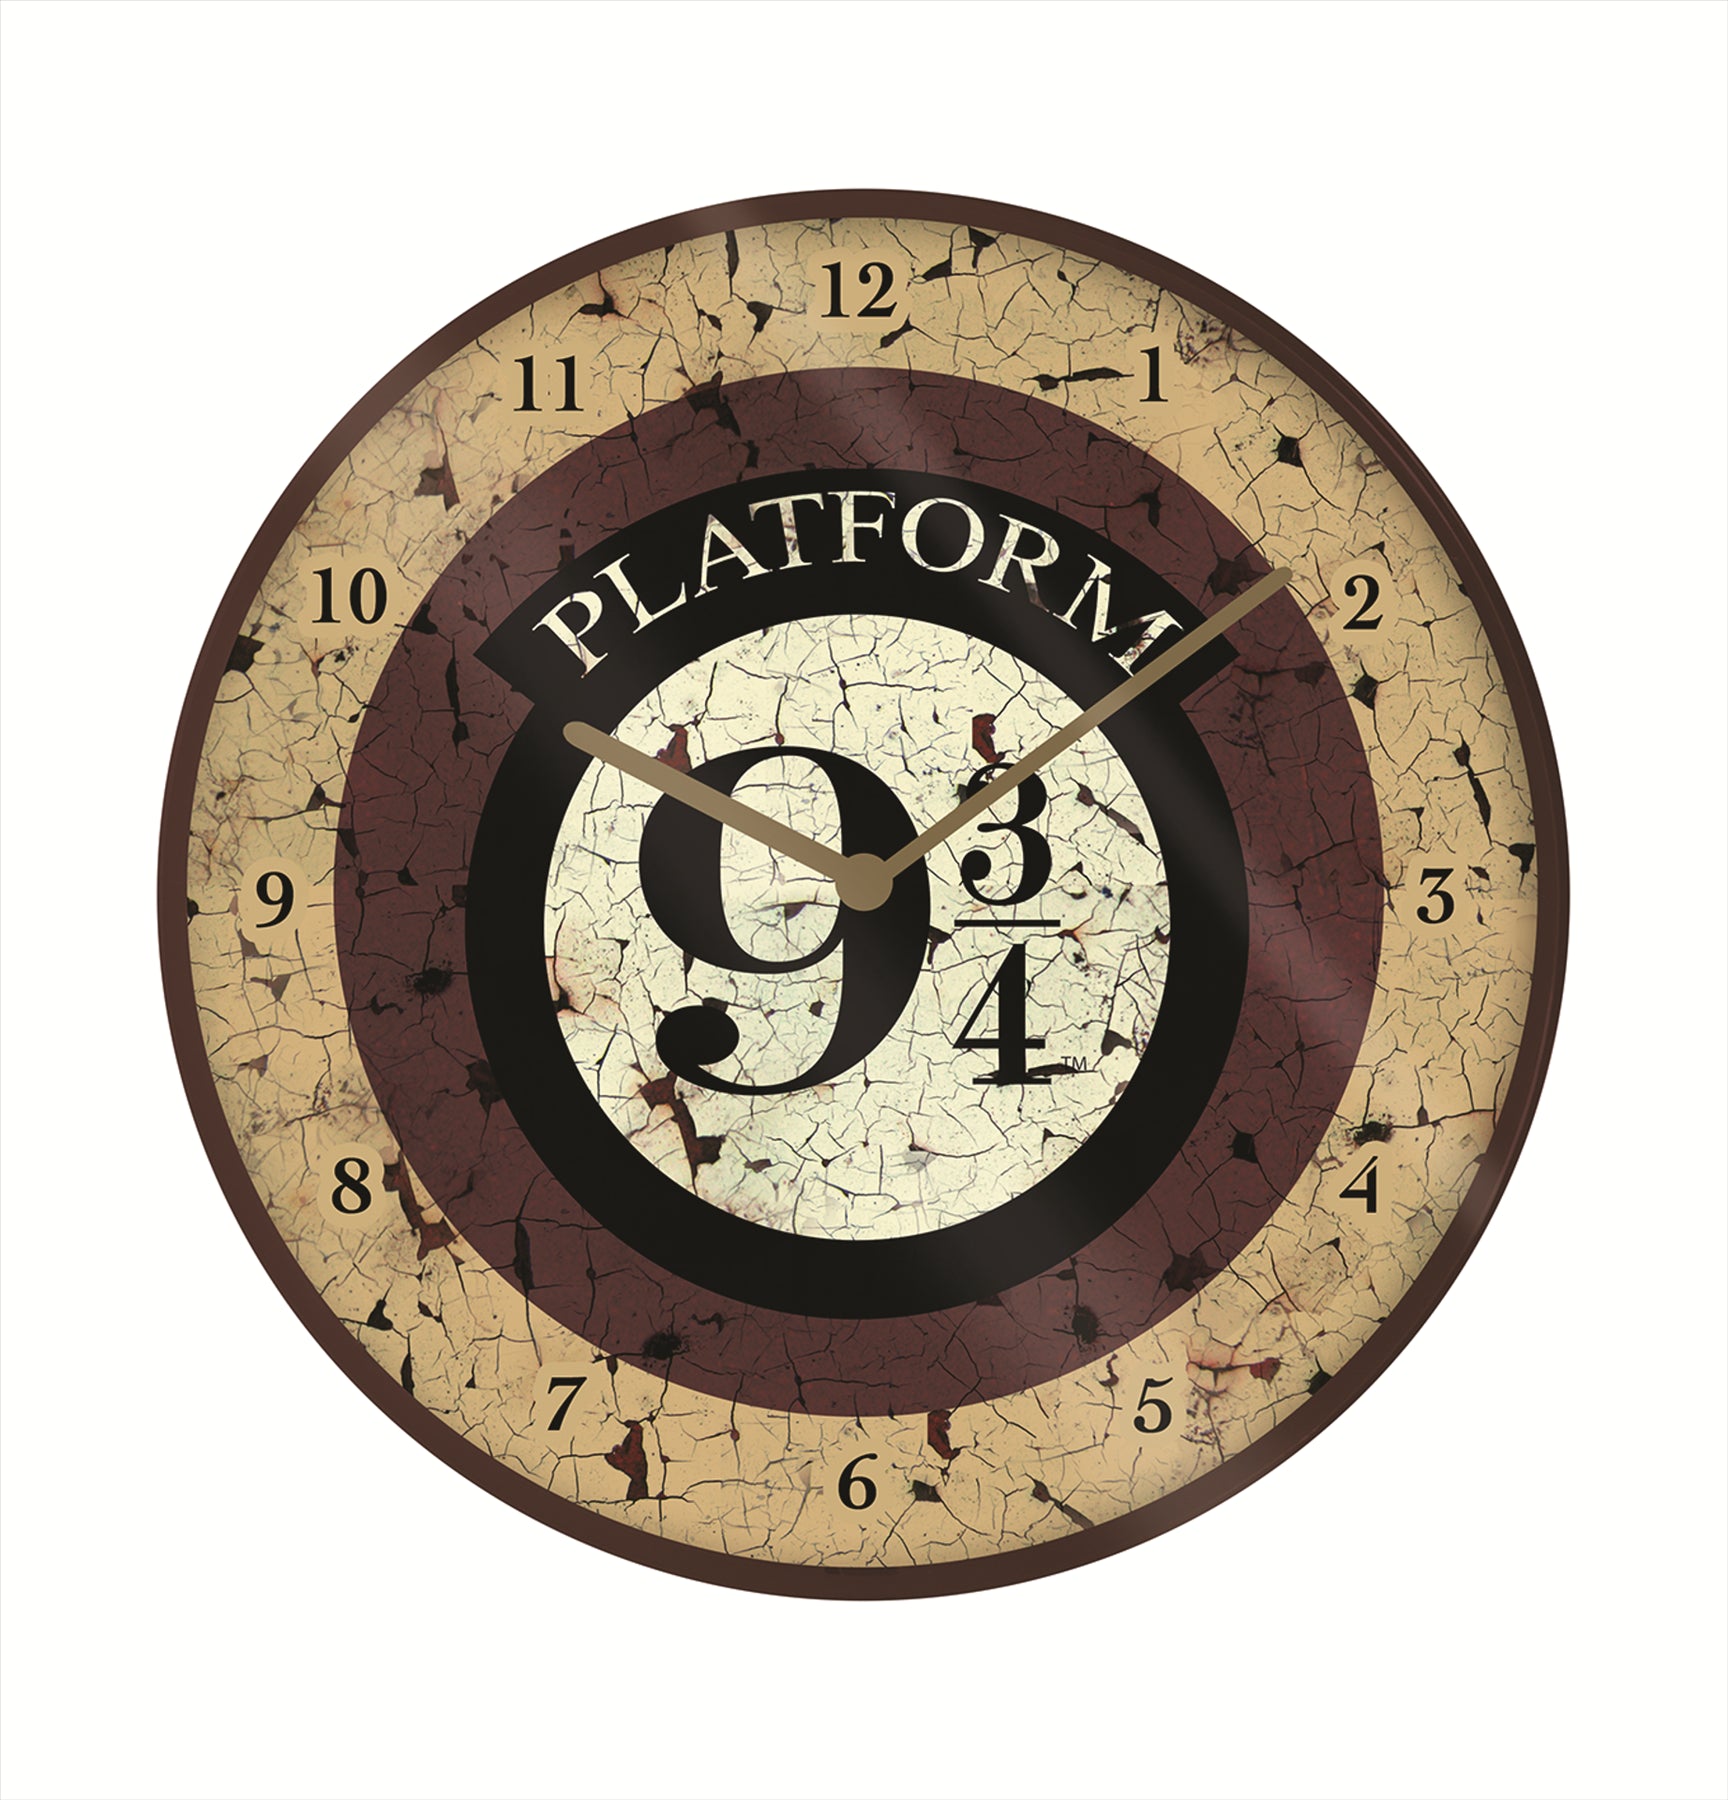 Harry Potter Platform 9 3/4 10" Wall Clock - Toptoys2u